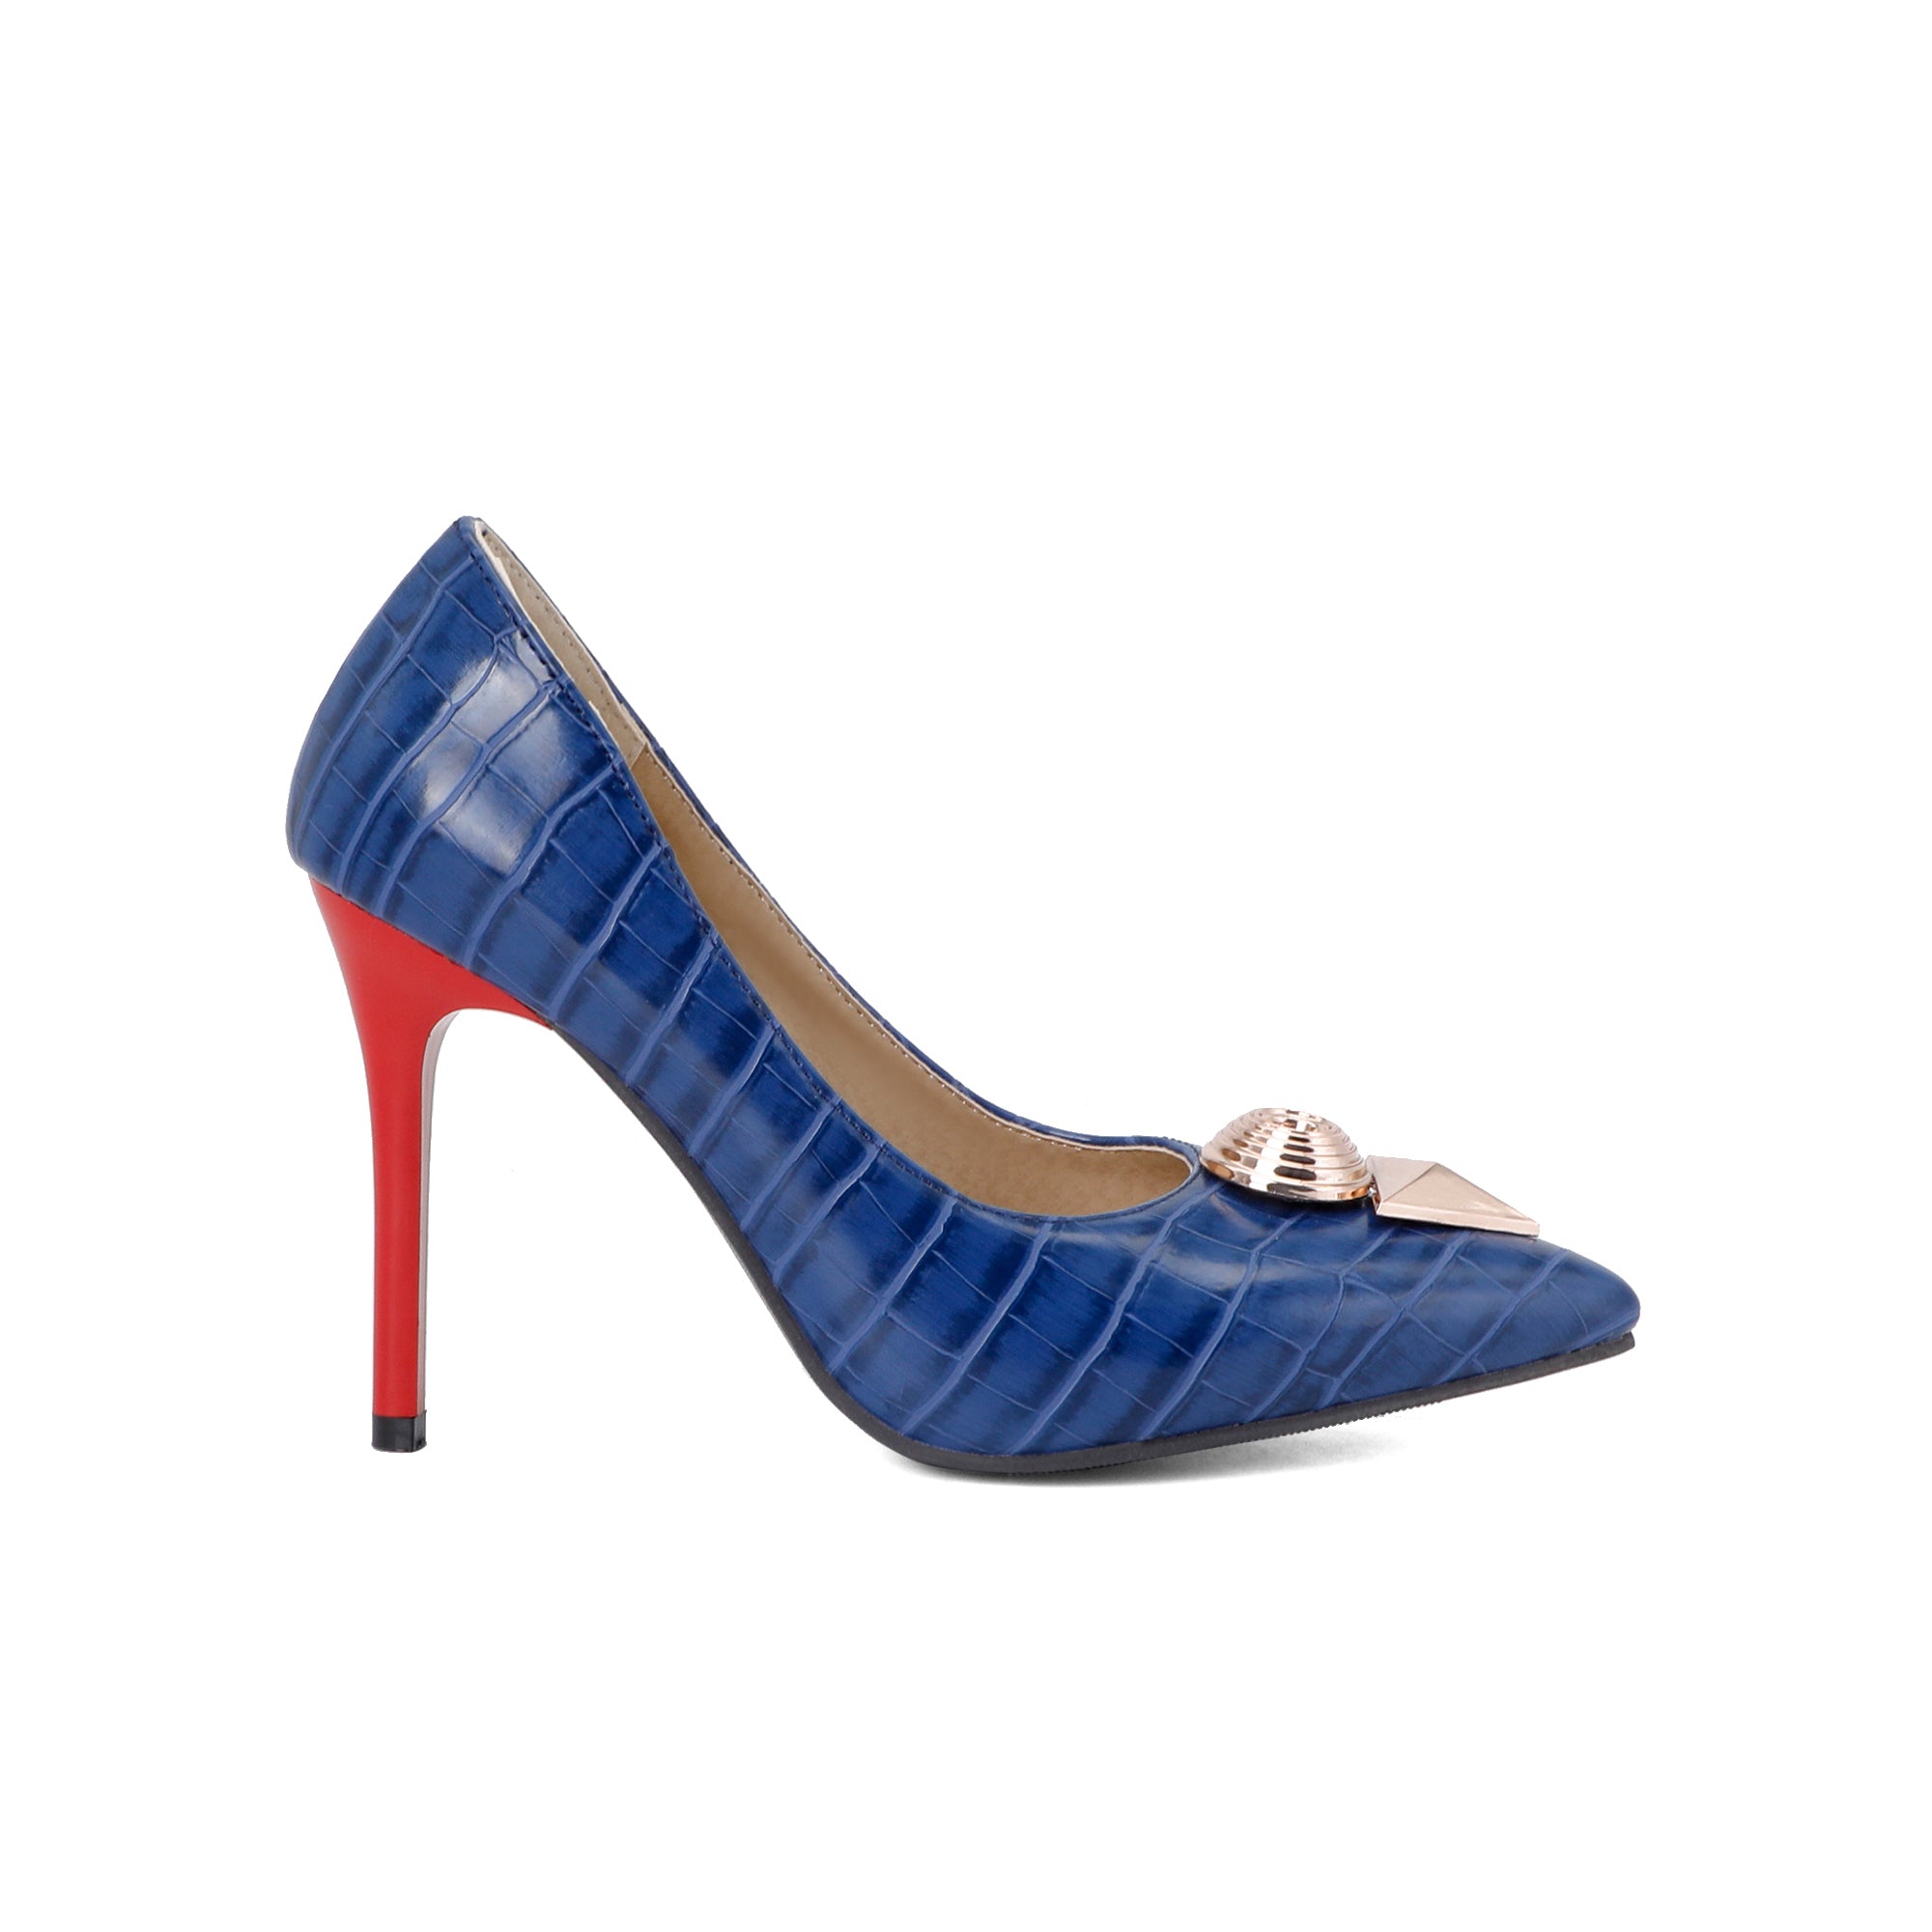 Bigsizeheels Trendy party heels - Blue freeshipping - bigsizeheel®-size5-size15 -All Plus Sizes Available!